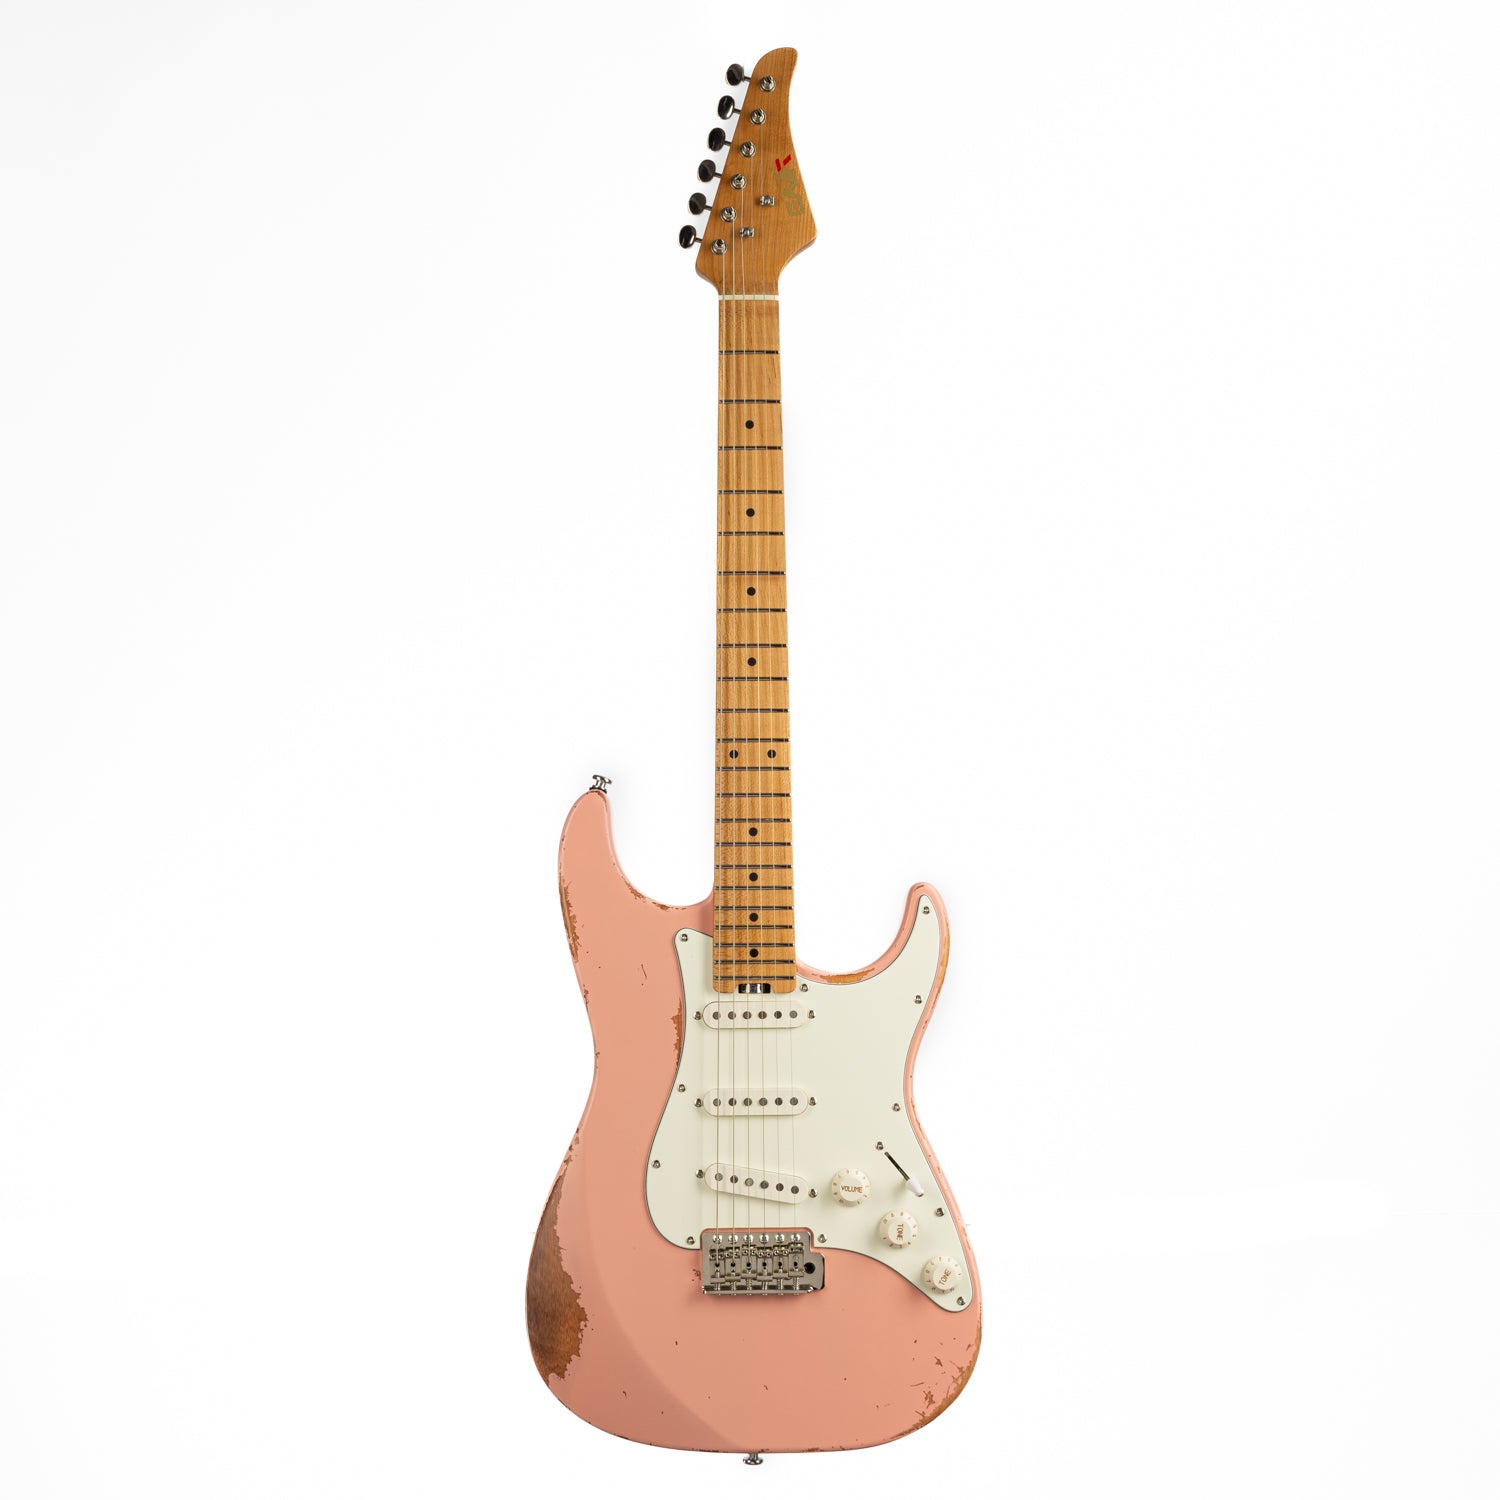 Eart electric guitar Vintage-VS60 maple fretboard pink